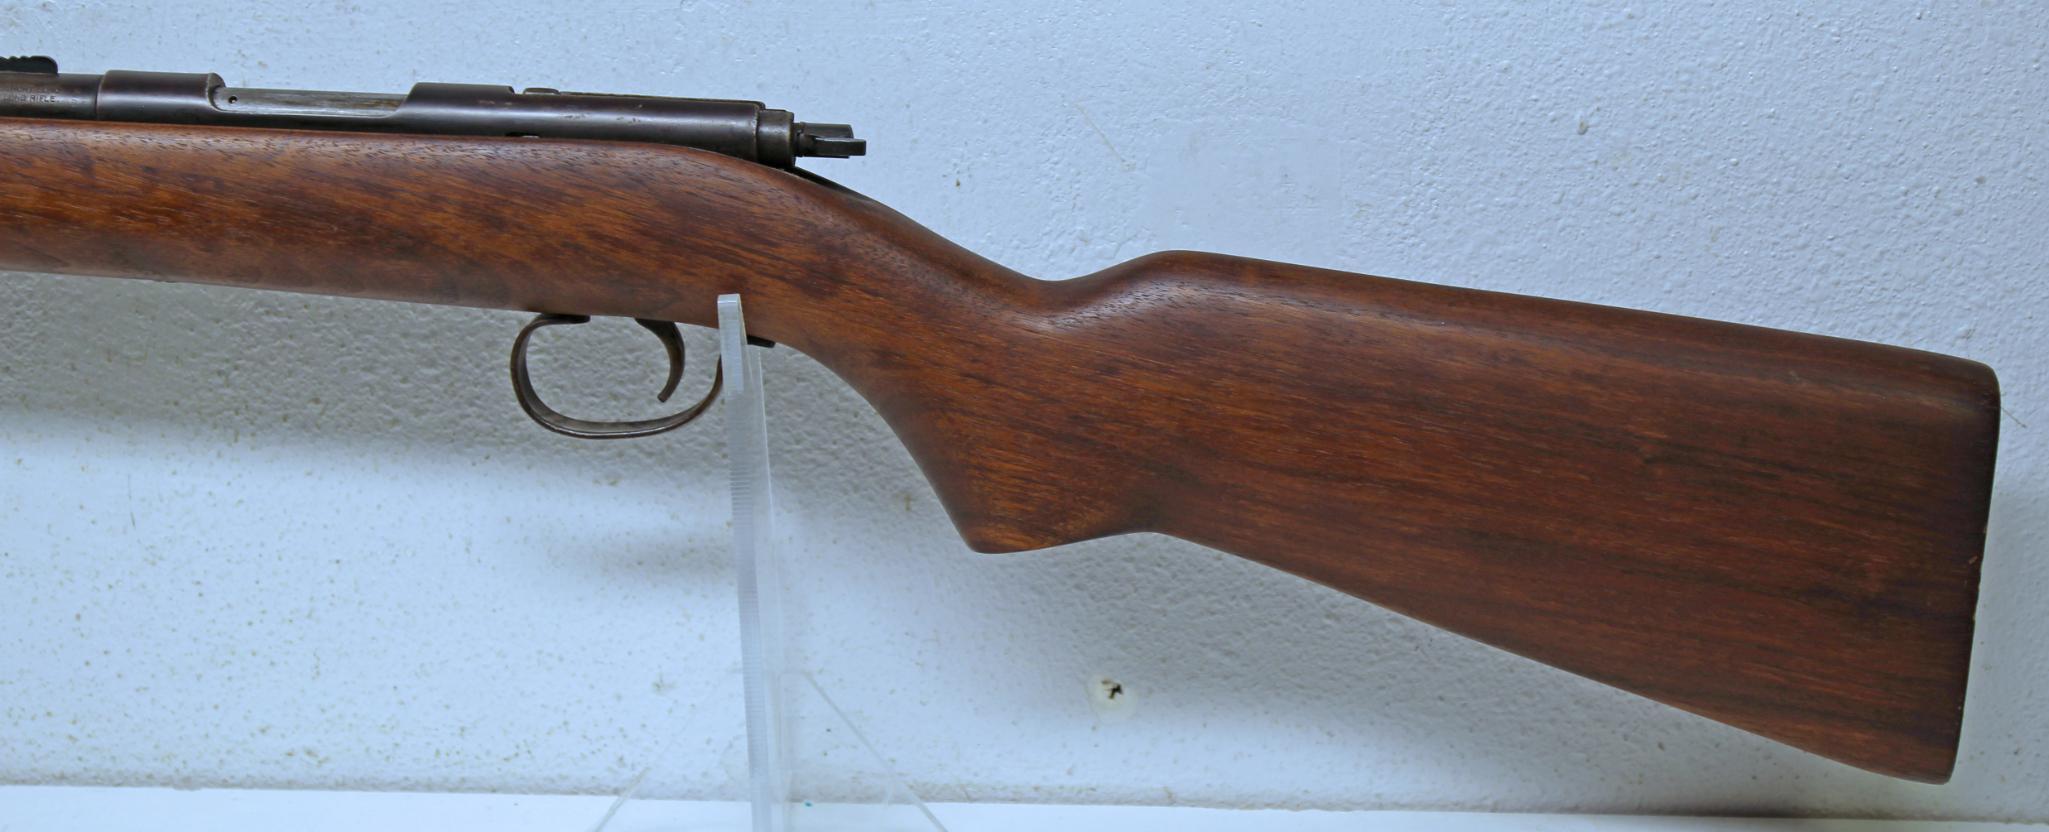 Remington Model 341 The Sport Master .22 S,L,LR Magazine Tube Fed Bolt Action Rifle No Butt Plate